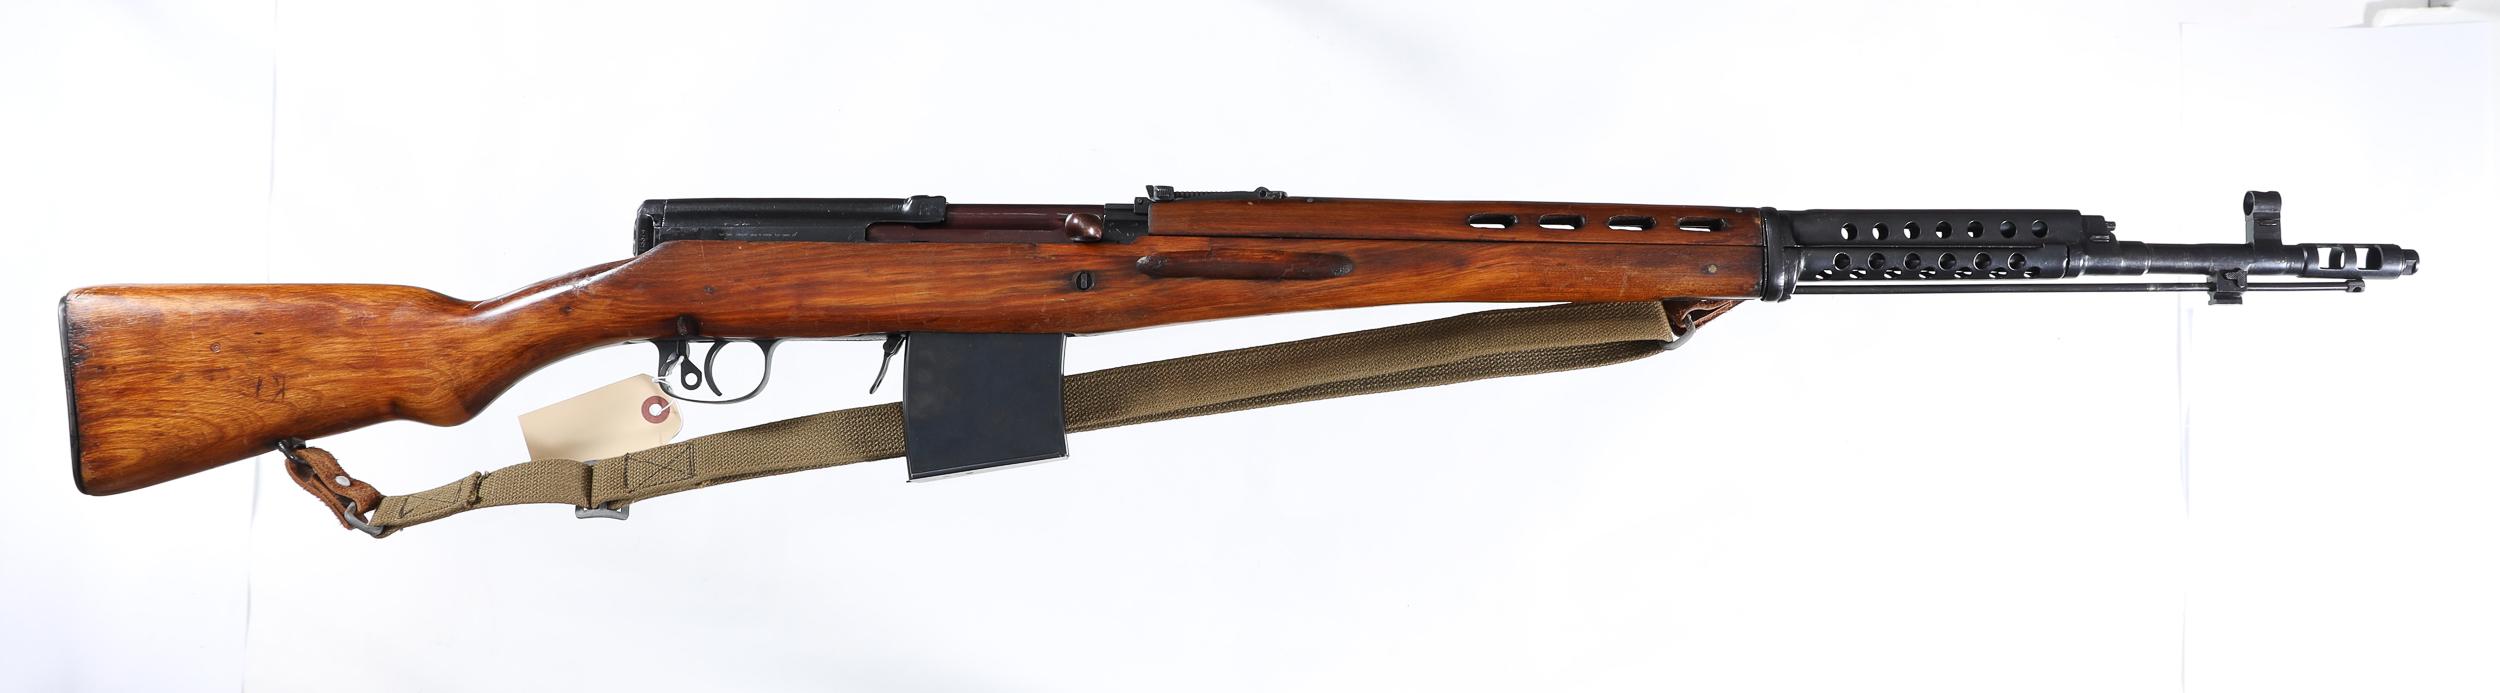 Tula Arsenal 1940 SVT Semi Rifle 7.62x54 R